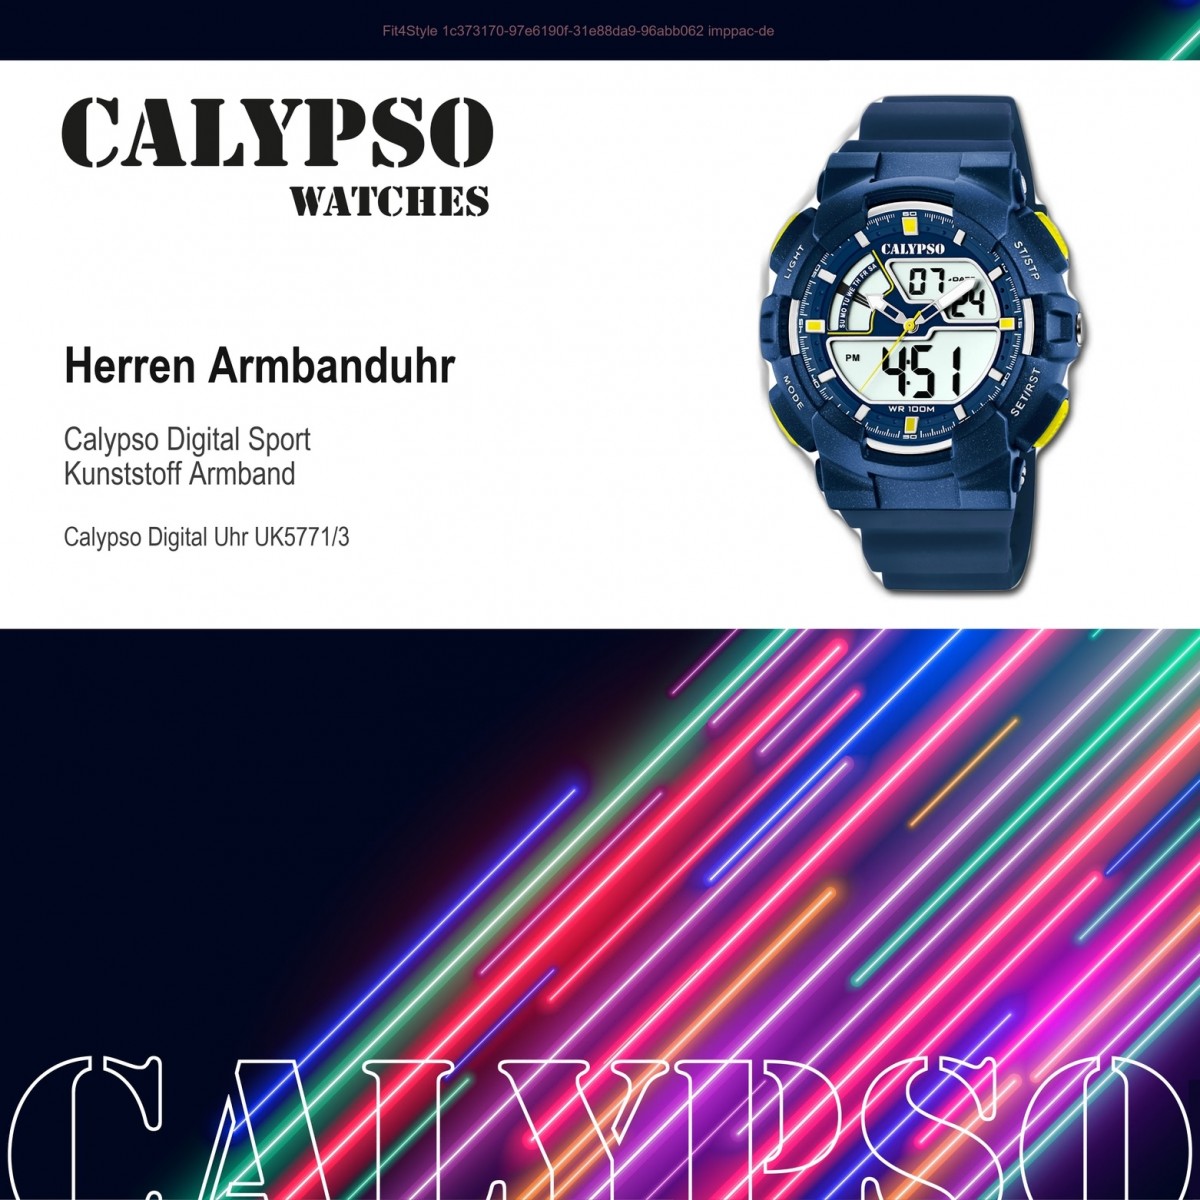 Street PU UK5771/3 blau Style Herren Armbanduhr K5771/3 Calypso Quarz-Uhr